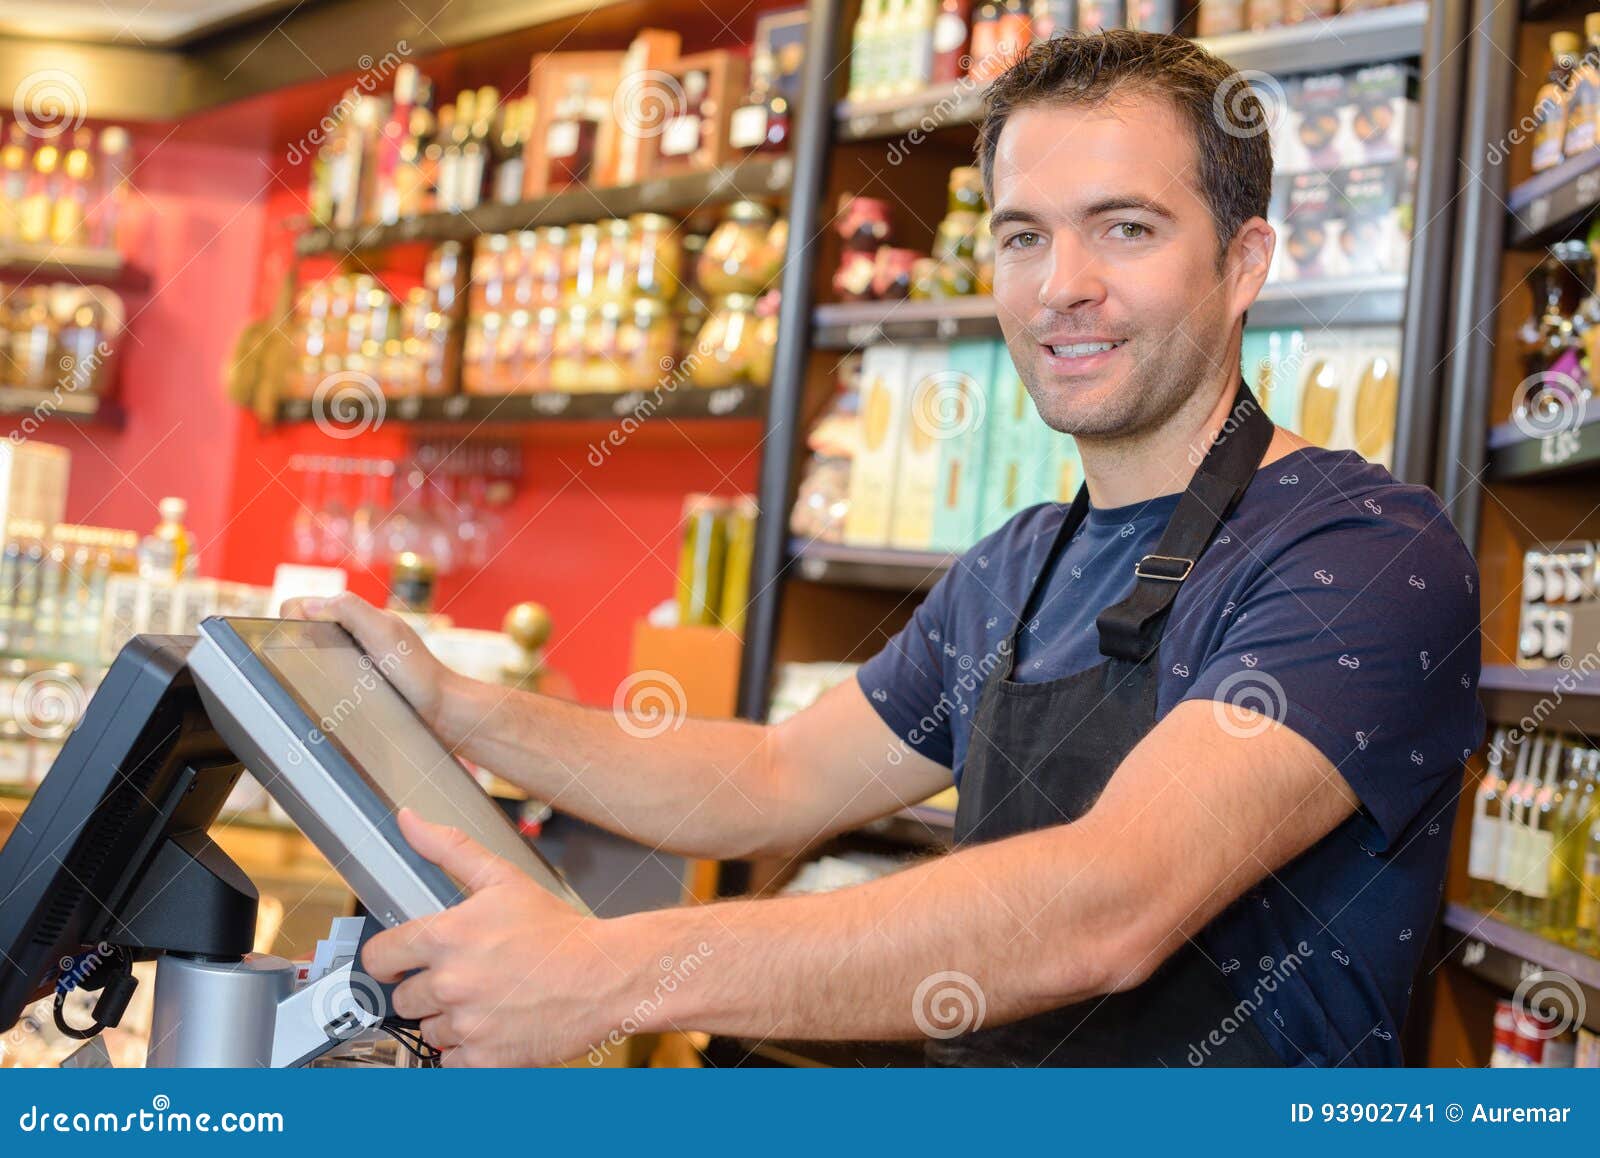 portrait clerk stood by electronic cash register